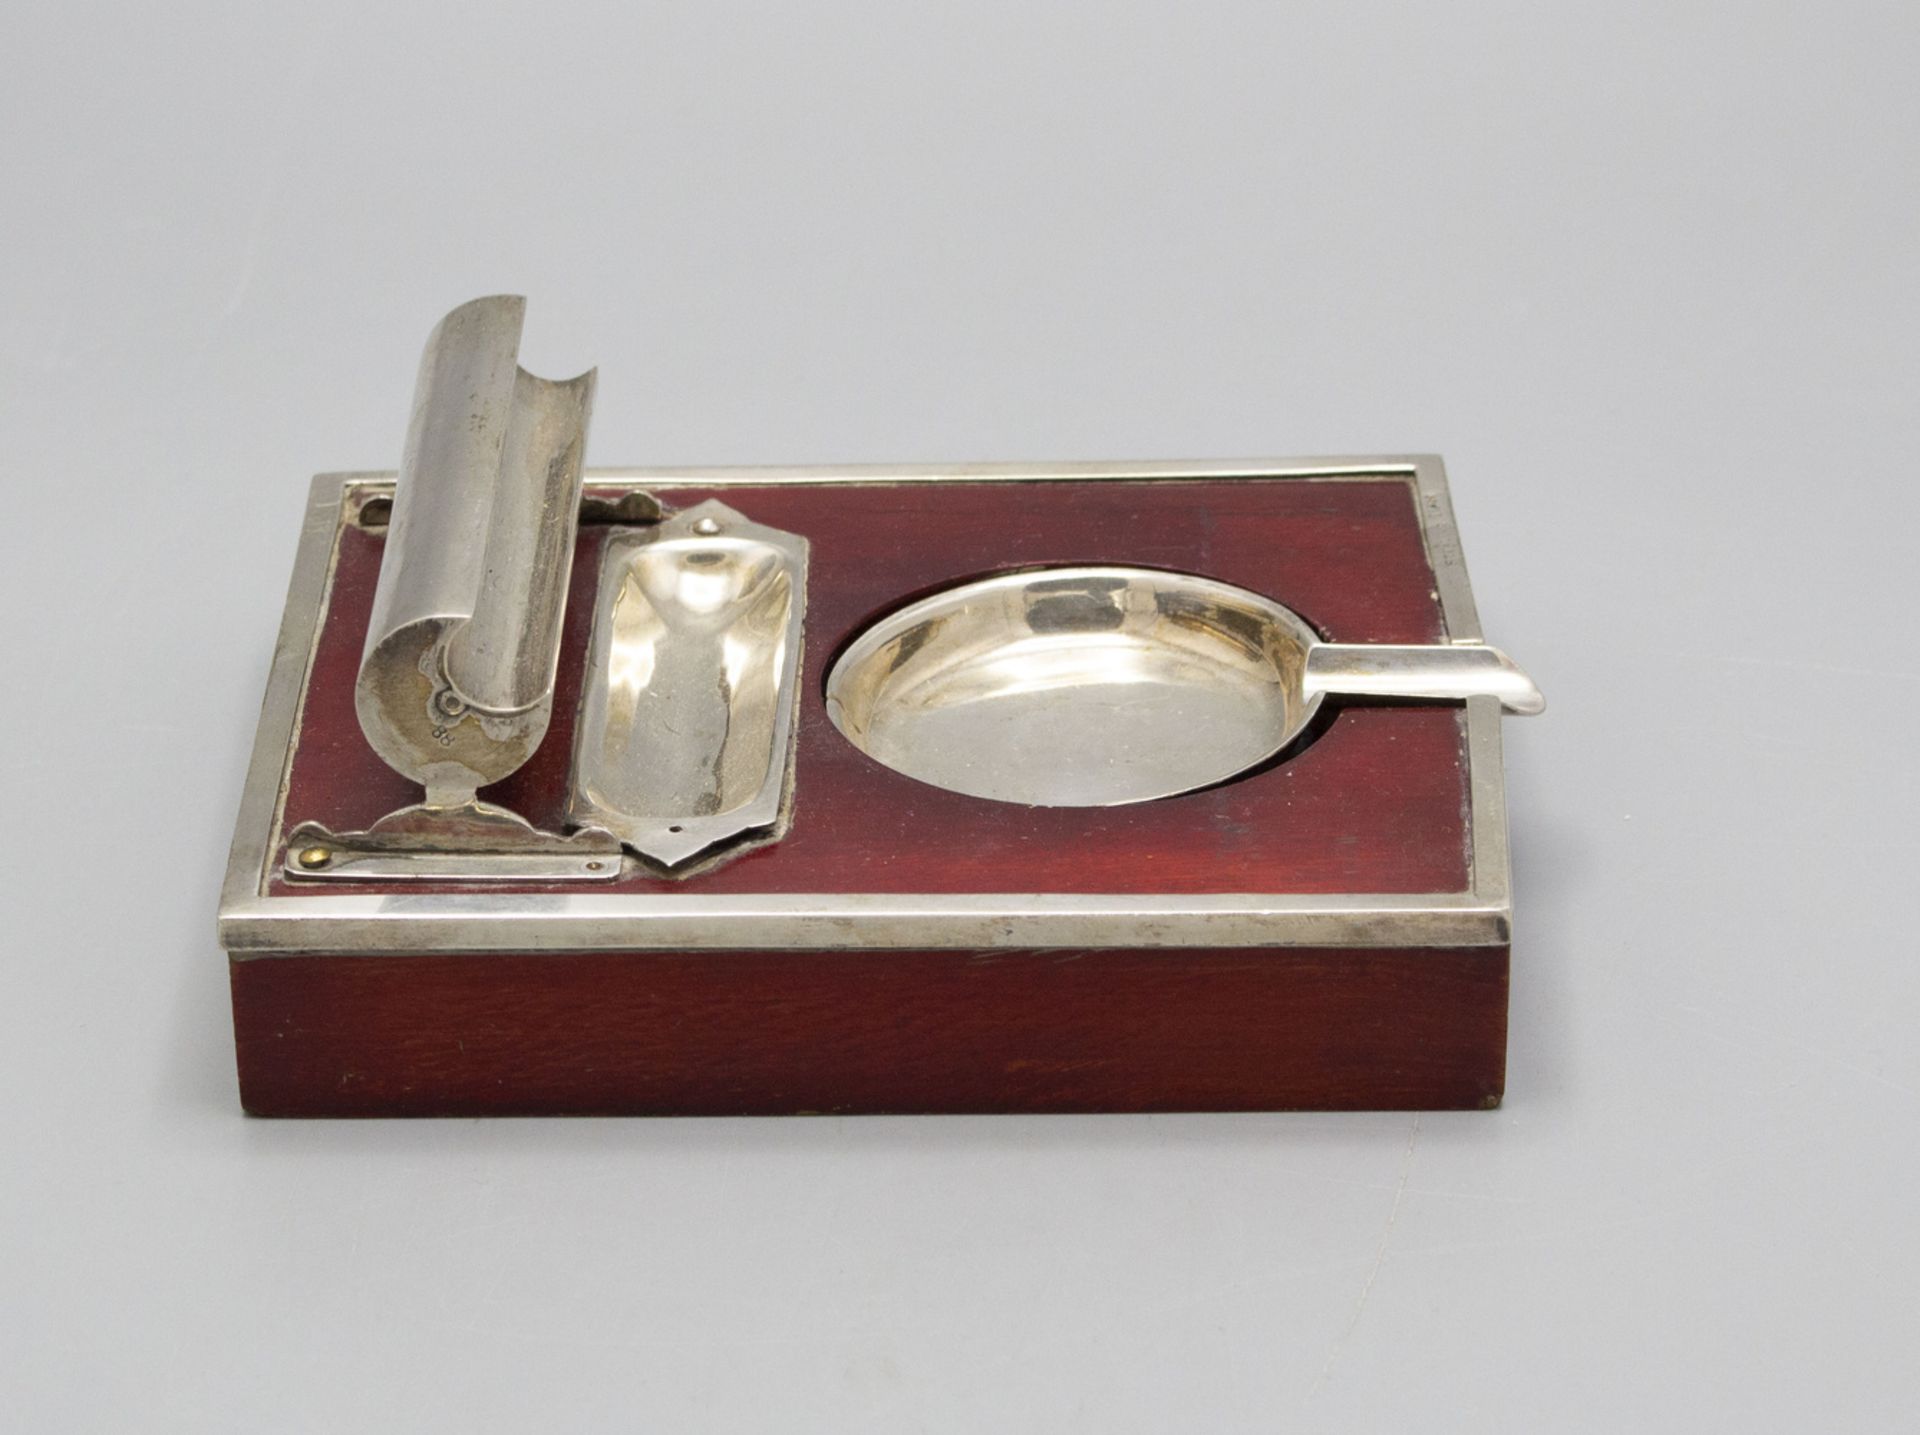 Art Déco Raucherset / An Art Nouveau wood and Sterling silver smoking set, SIAM, um 1920 - Image 3 of 5